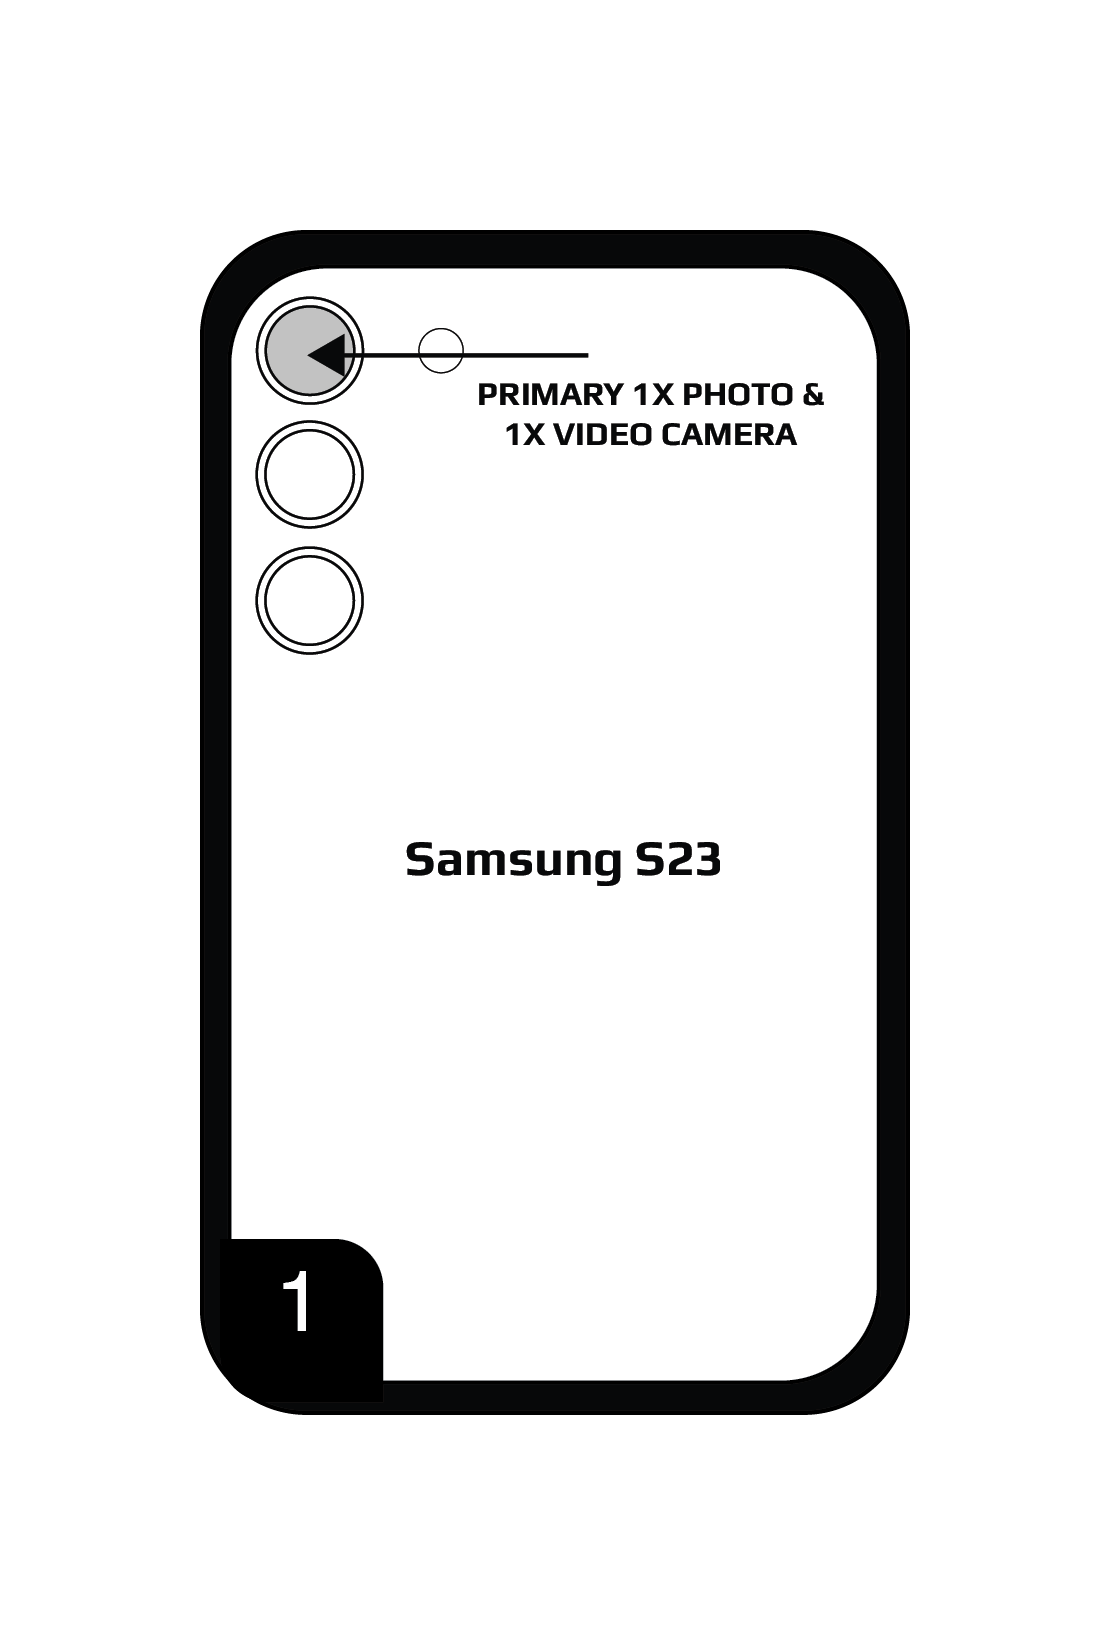 Samsung S23 camera step 1